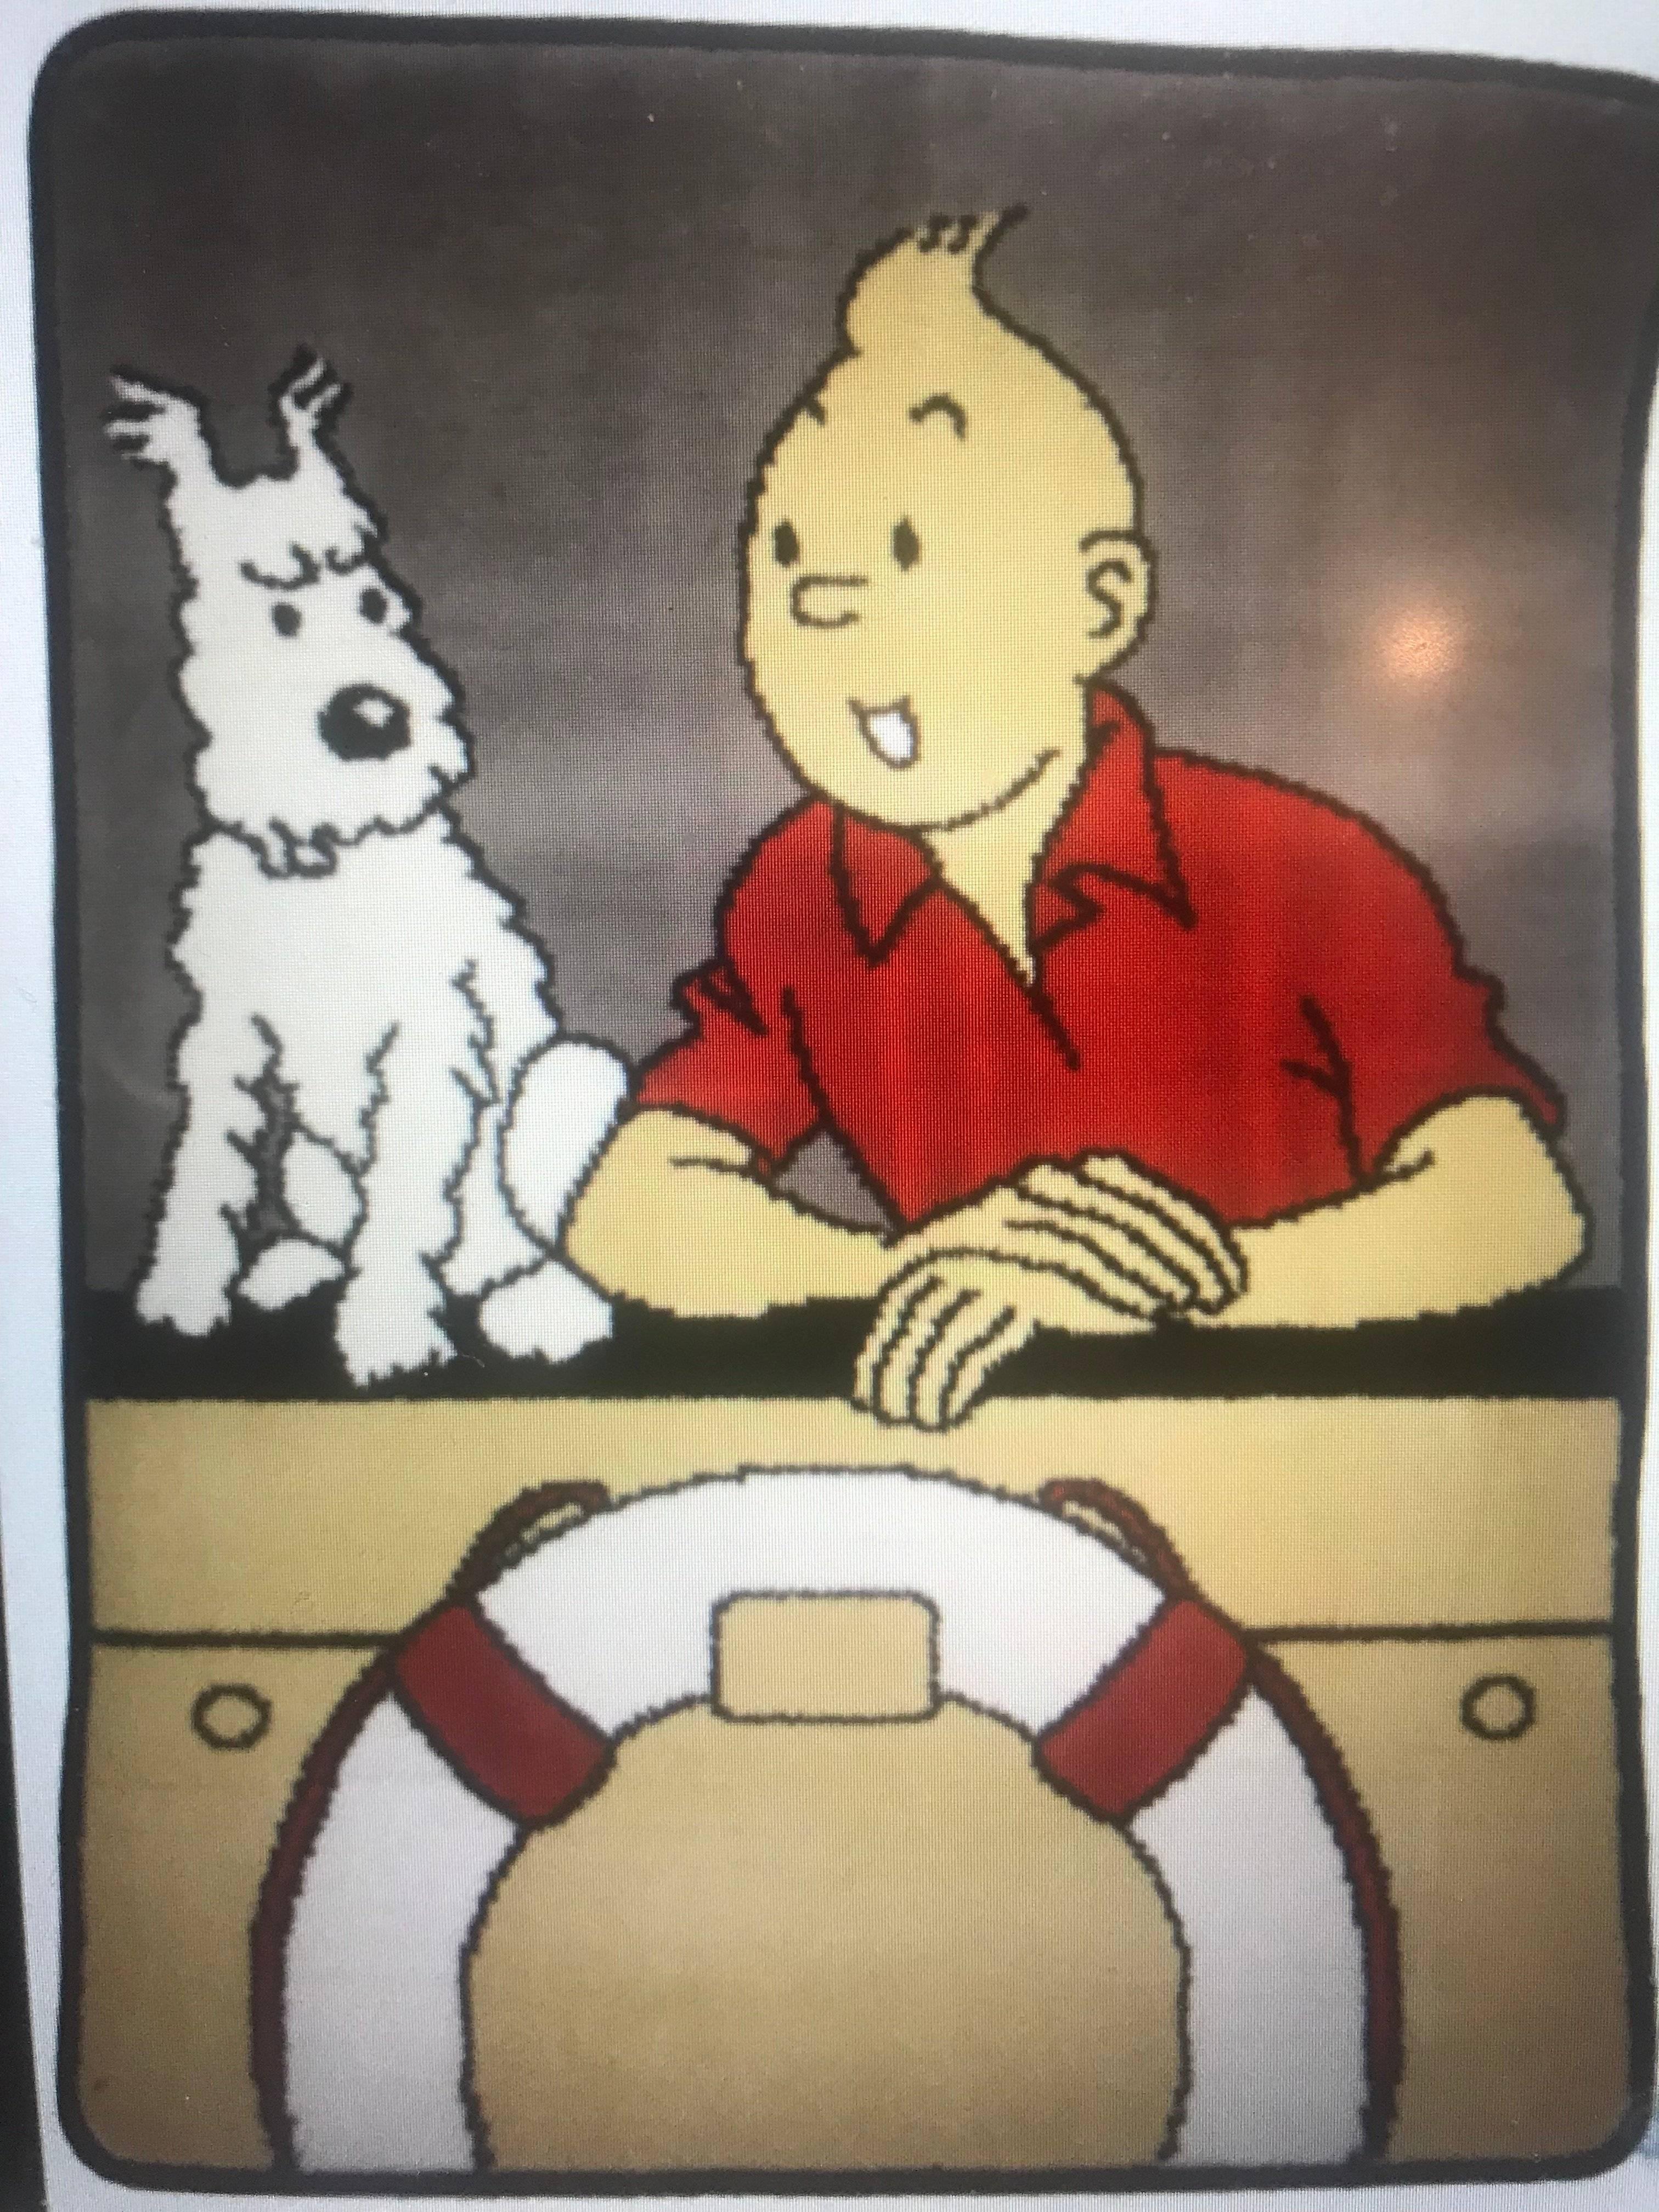 Belgian Tintin on the Boat Carpet